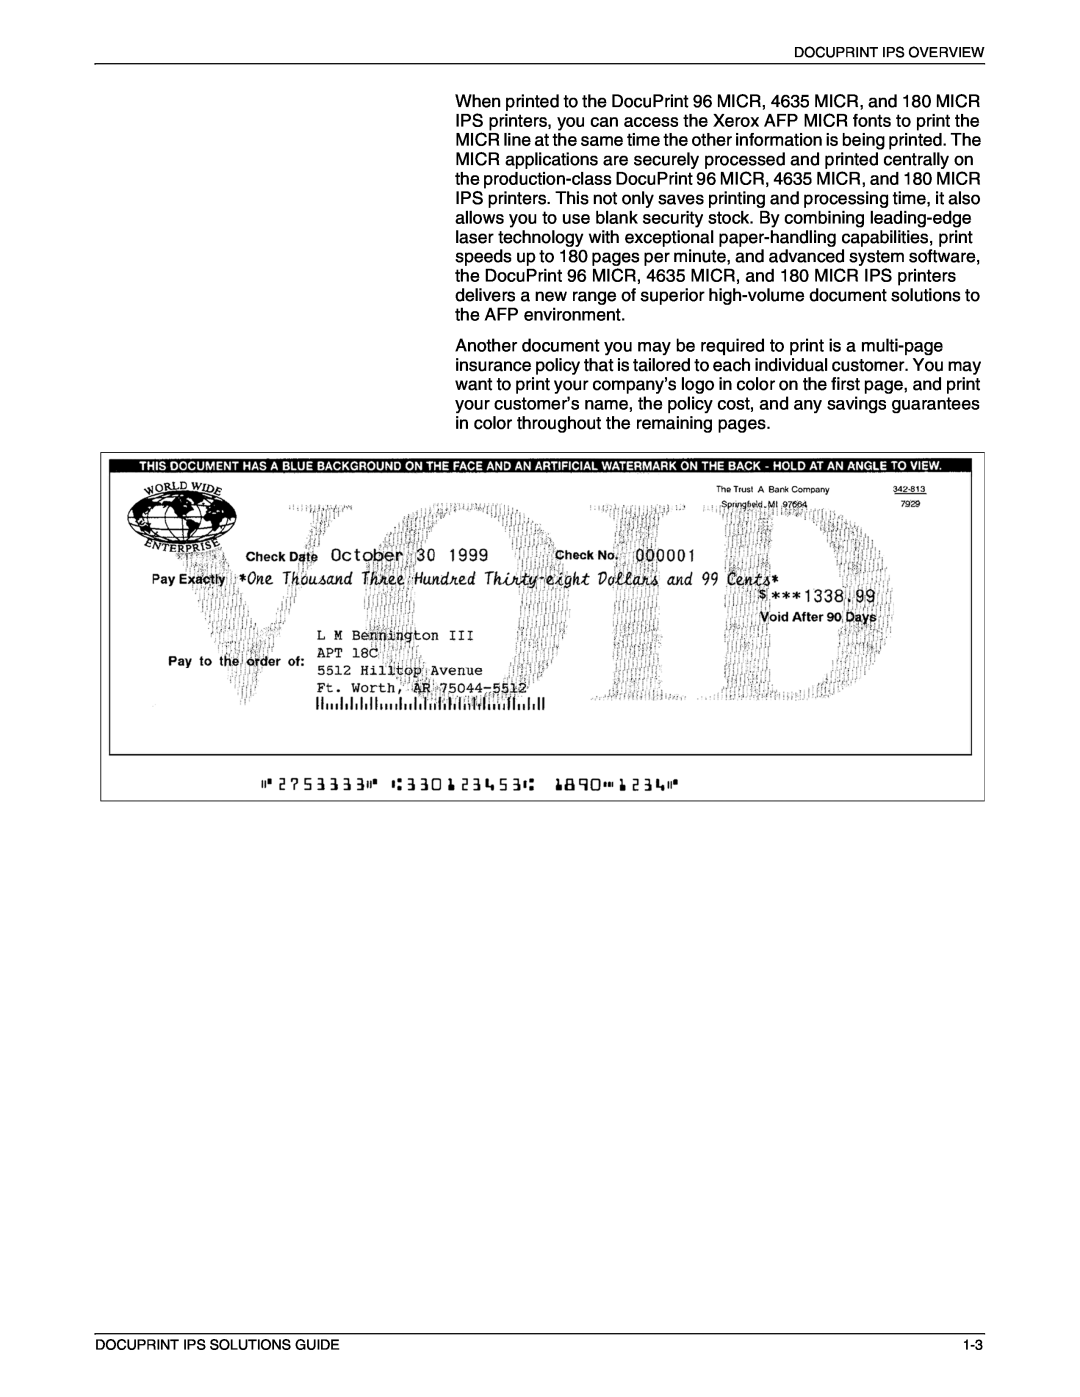 Xerox 721P88200 manual Docuprint Ips Overview, Docuprint Ips Solutions Guide 